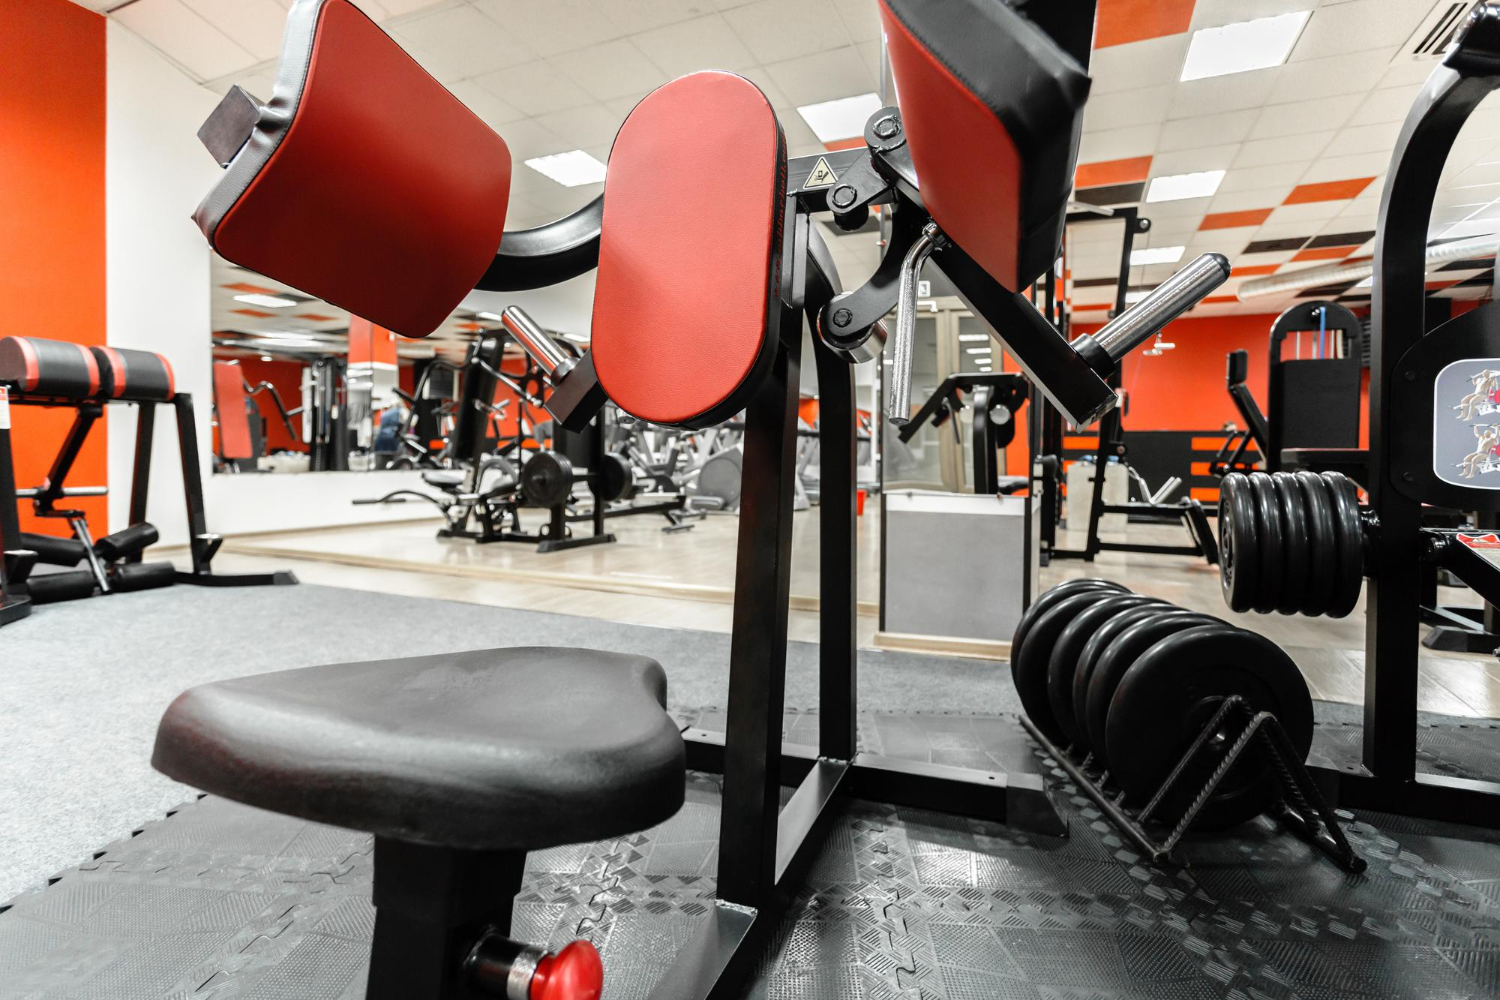 gym interior with bodybuilding equipment